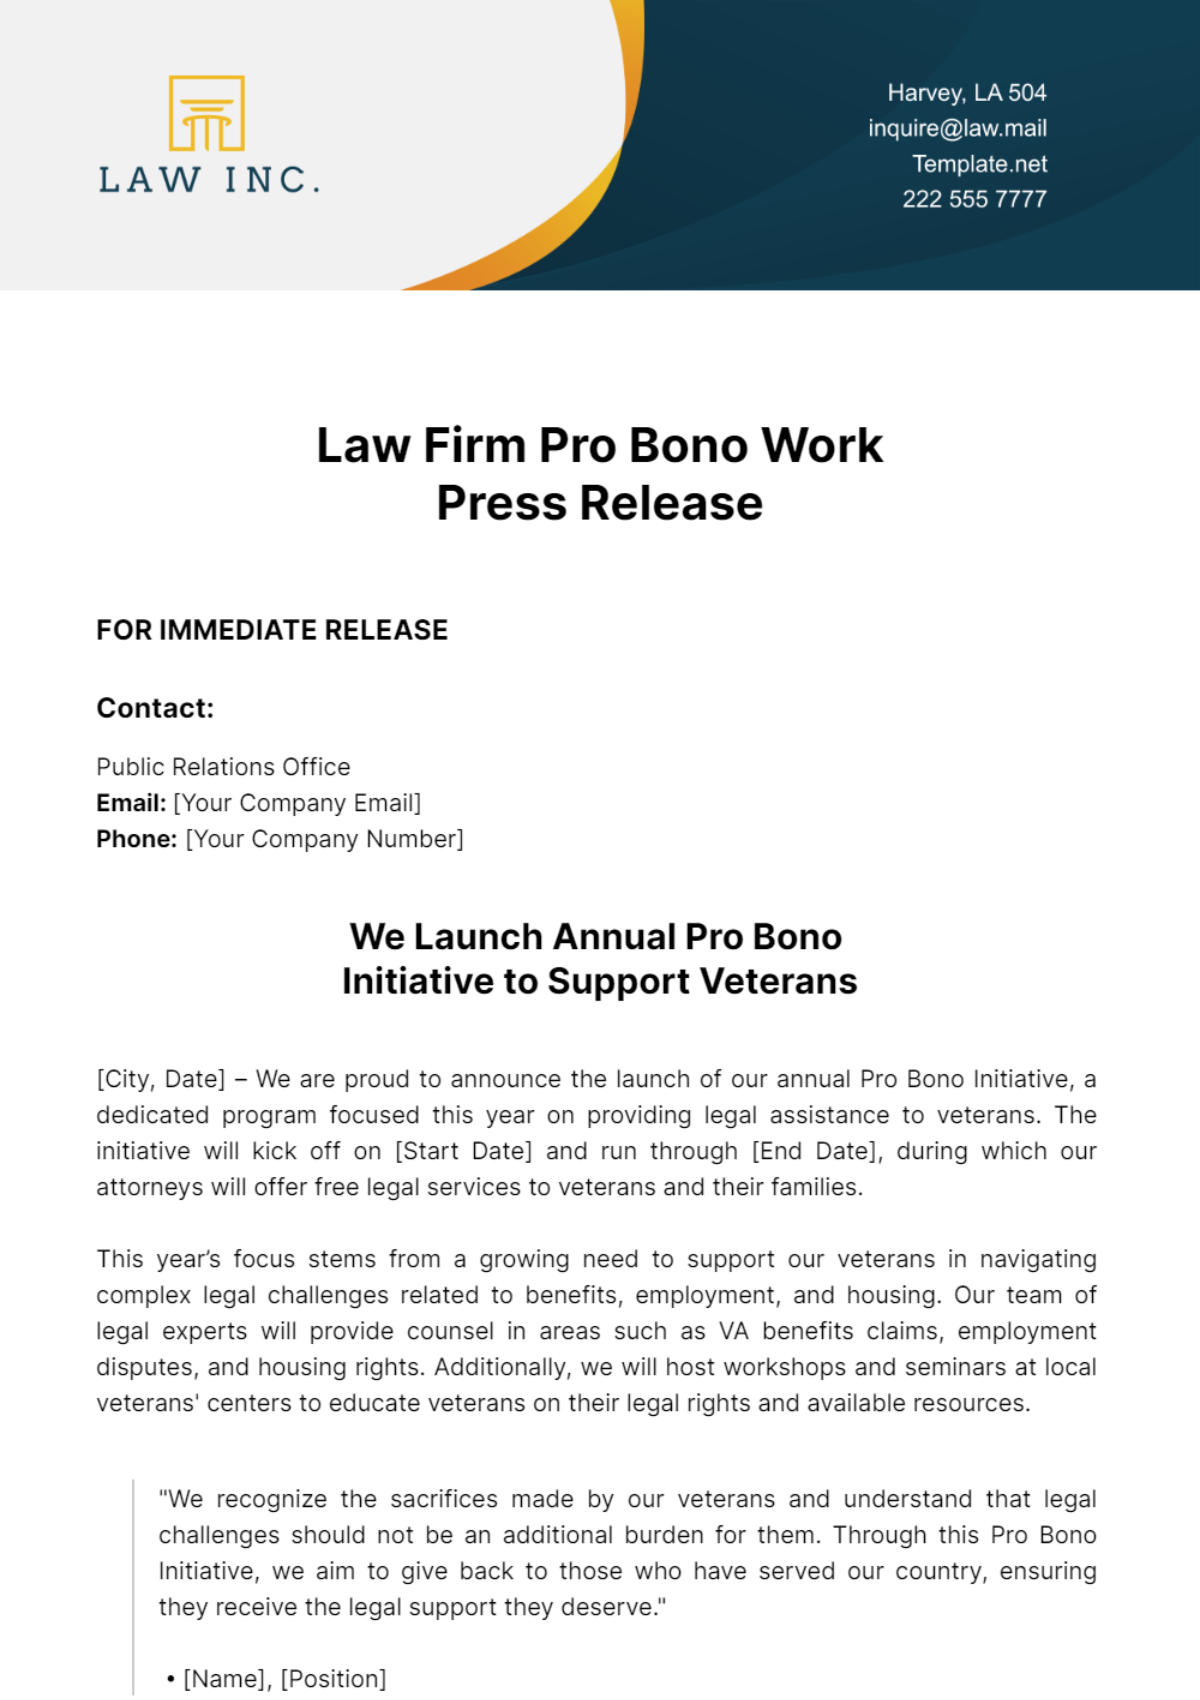 Law Firm Pro Bono Work Press Release Template